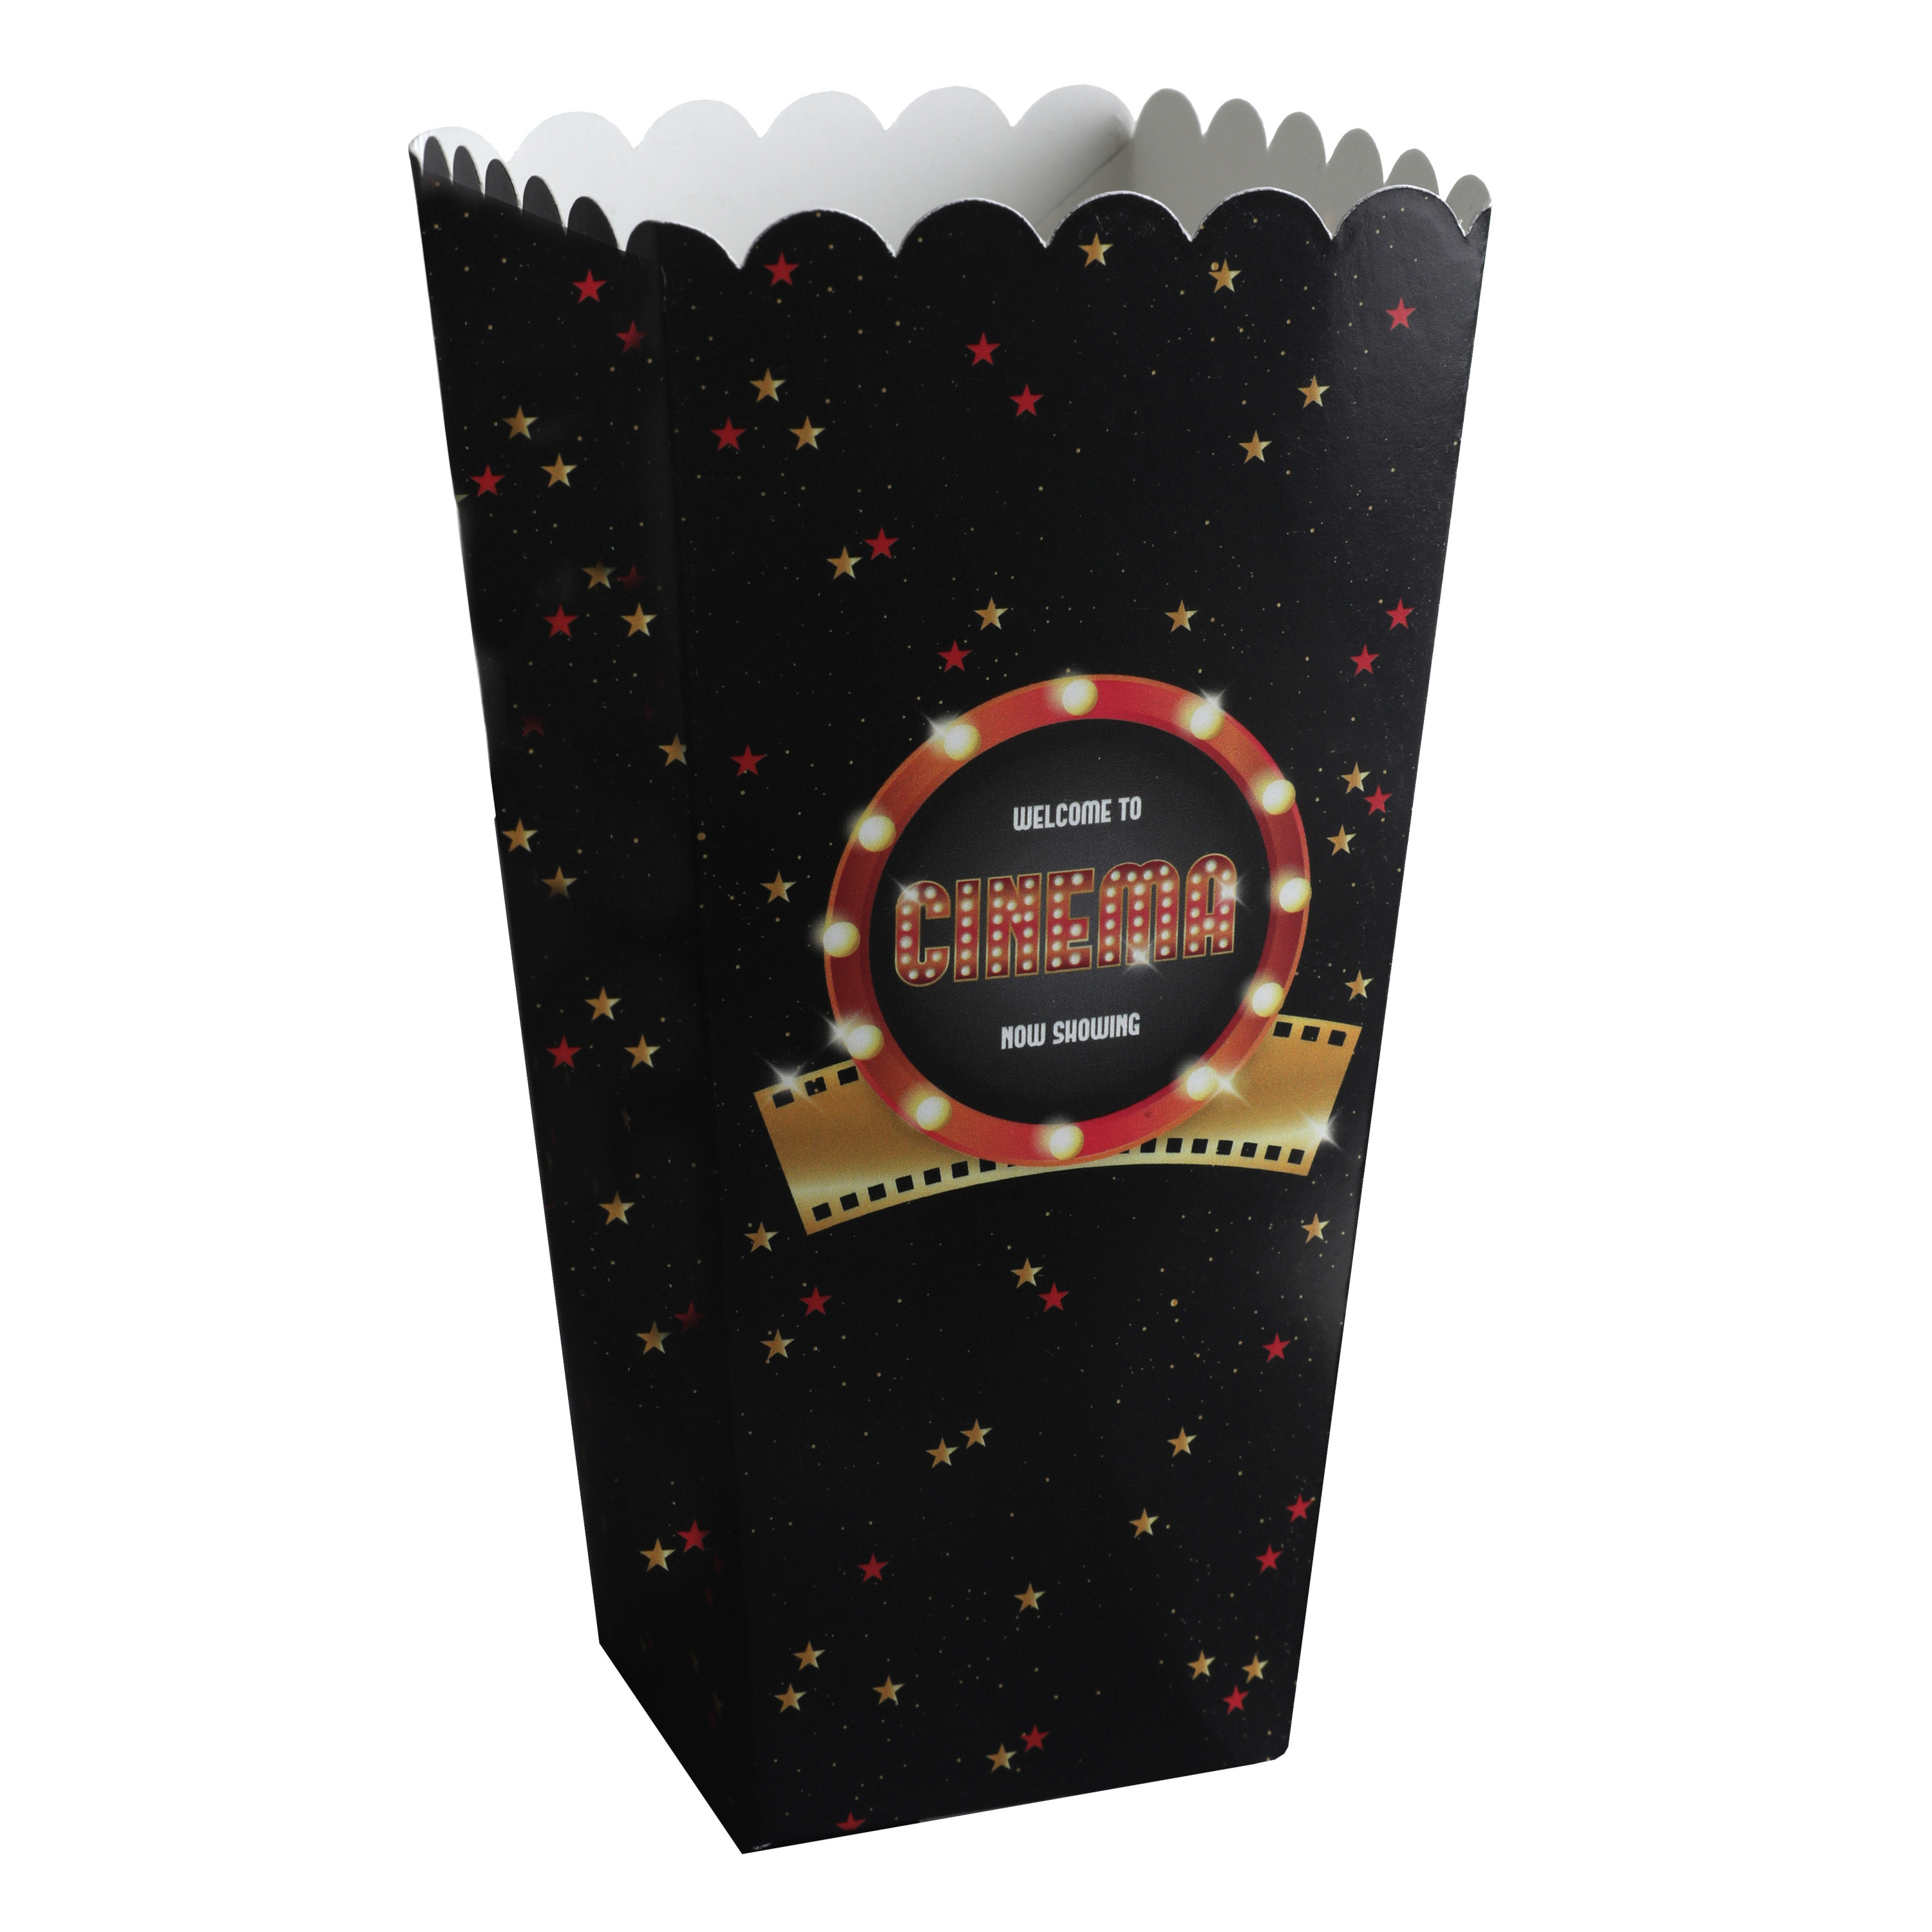 Popcorn-snoep bakjes 8x Hollywood-film thema karton 6 x 8 x 17 cm feest uitdeel bakjes